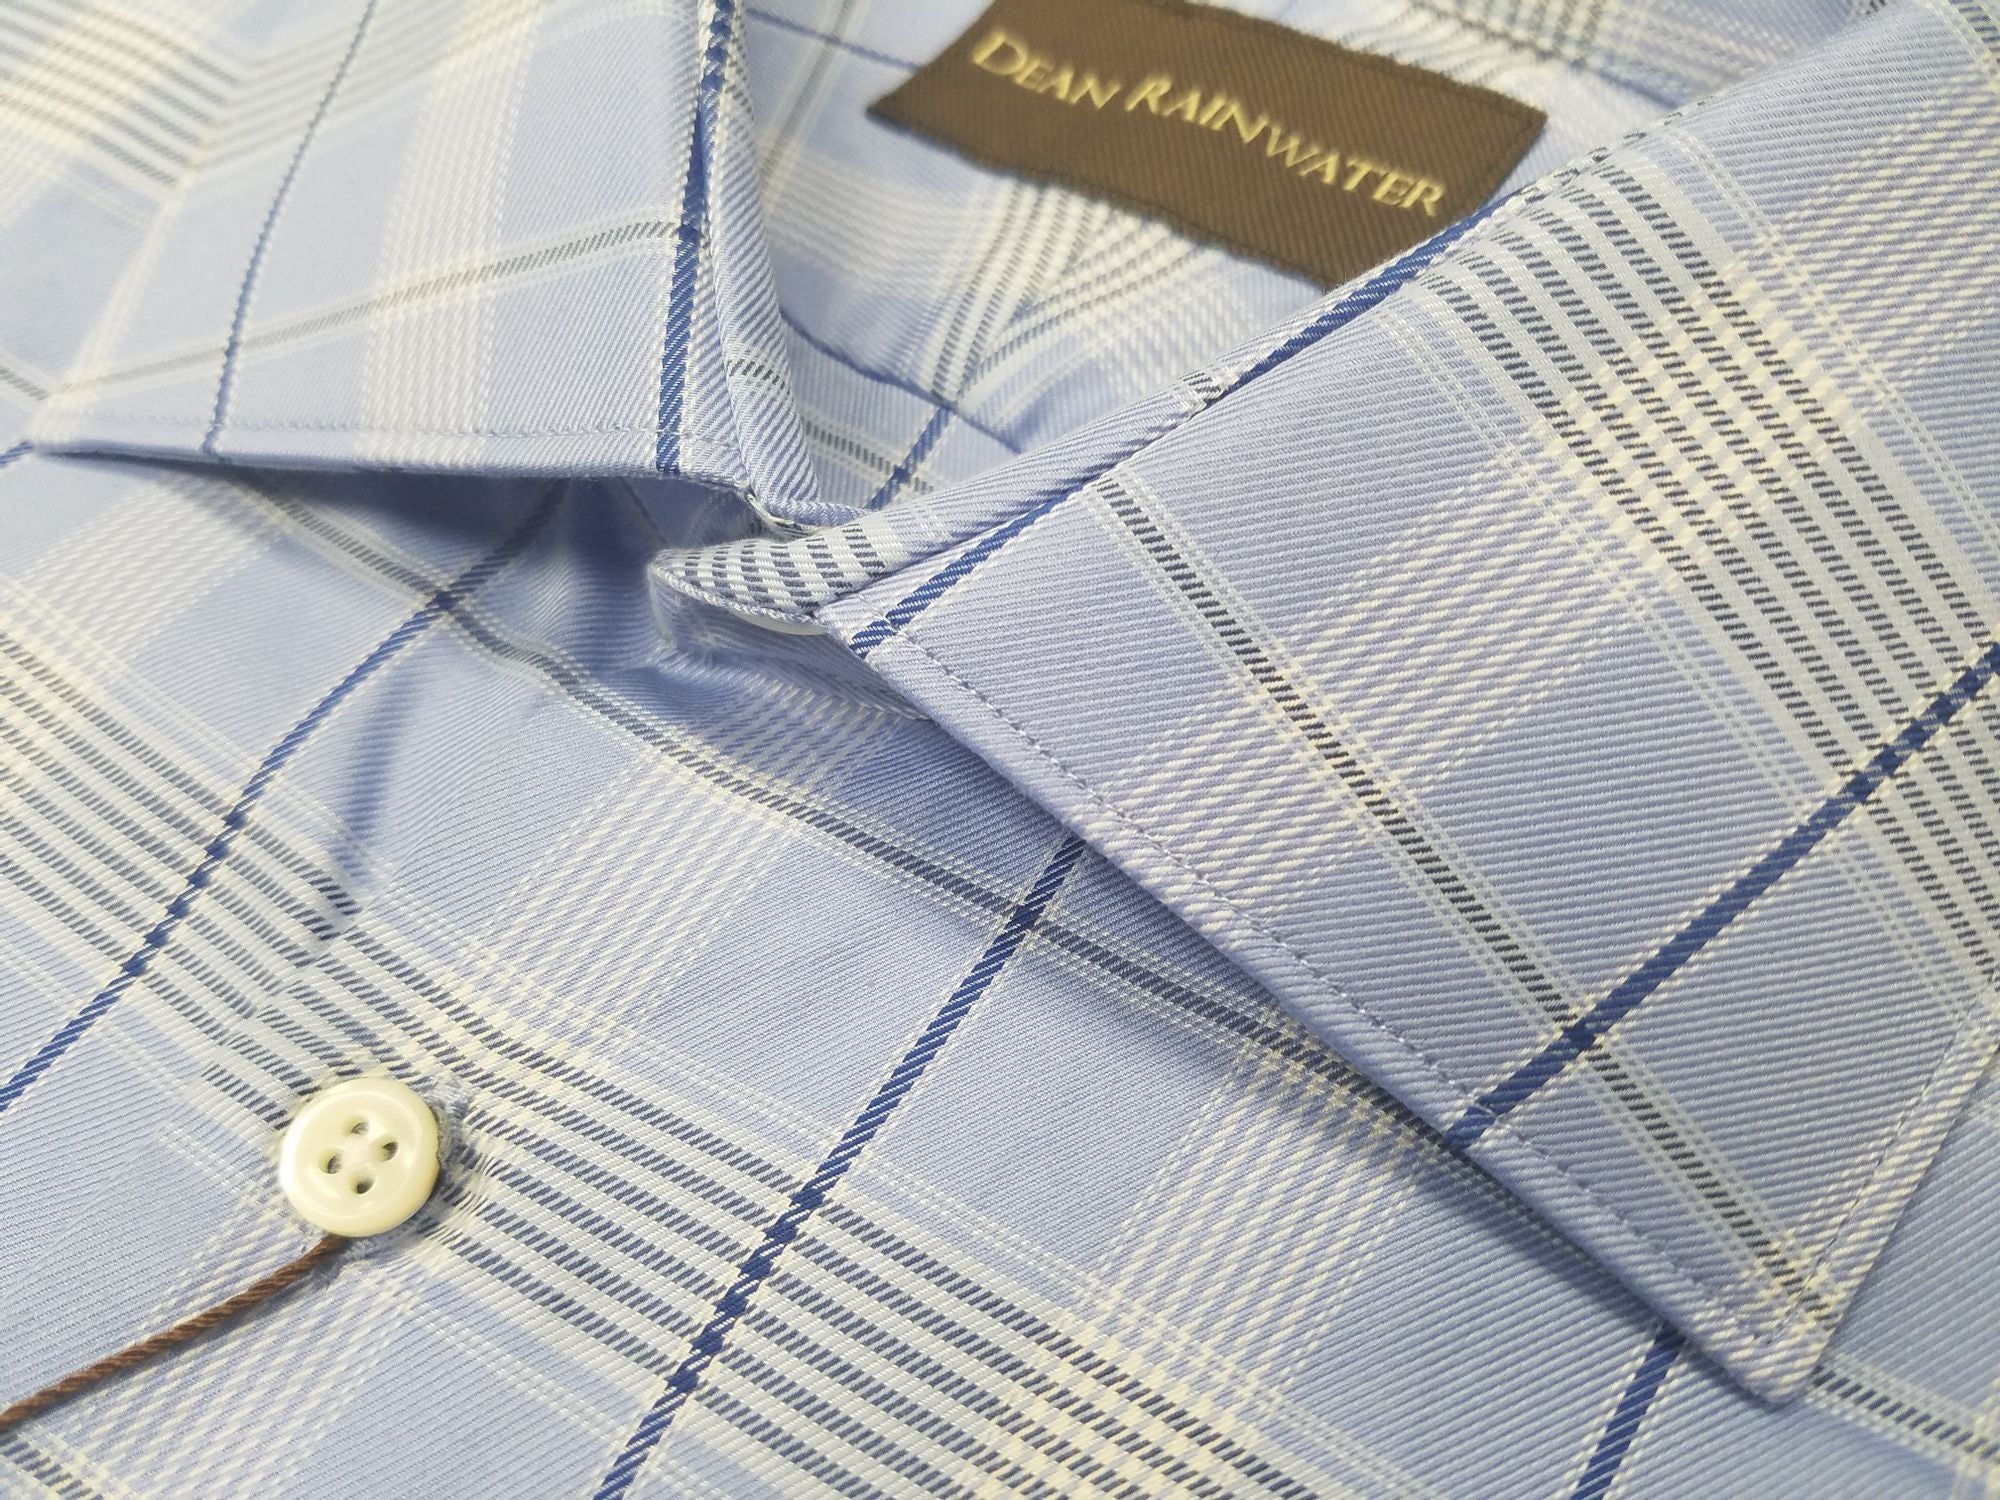 Rainwater's 120's Two Ply 100% Cotton Light Blue Plaid Dress Shirt - Rainwater's Men's Clothing and Tuxedo Rental